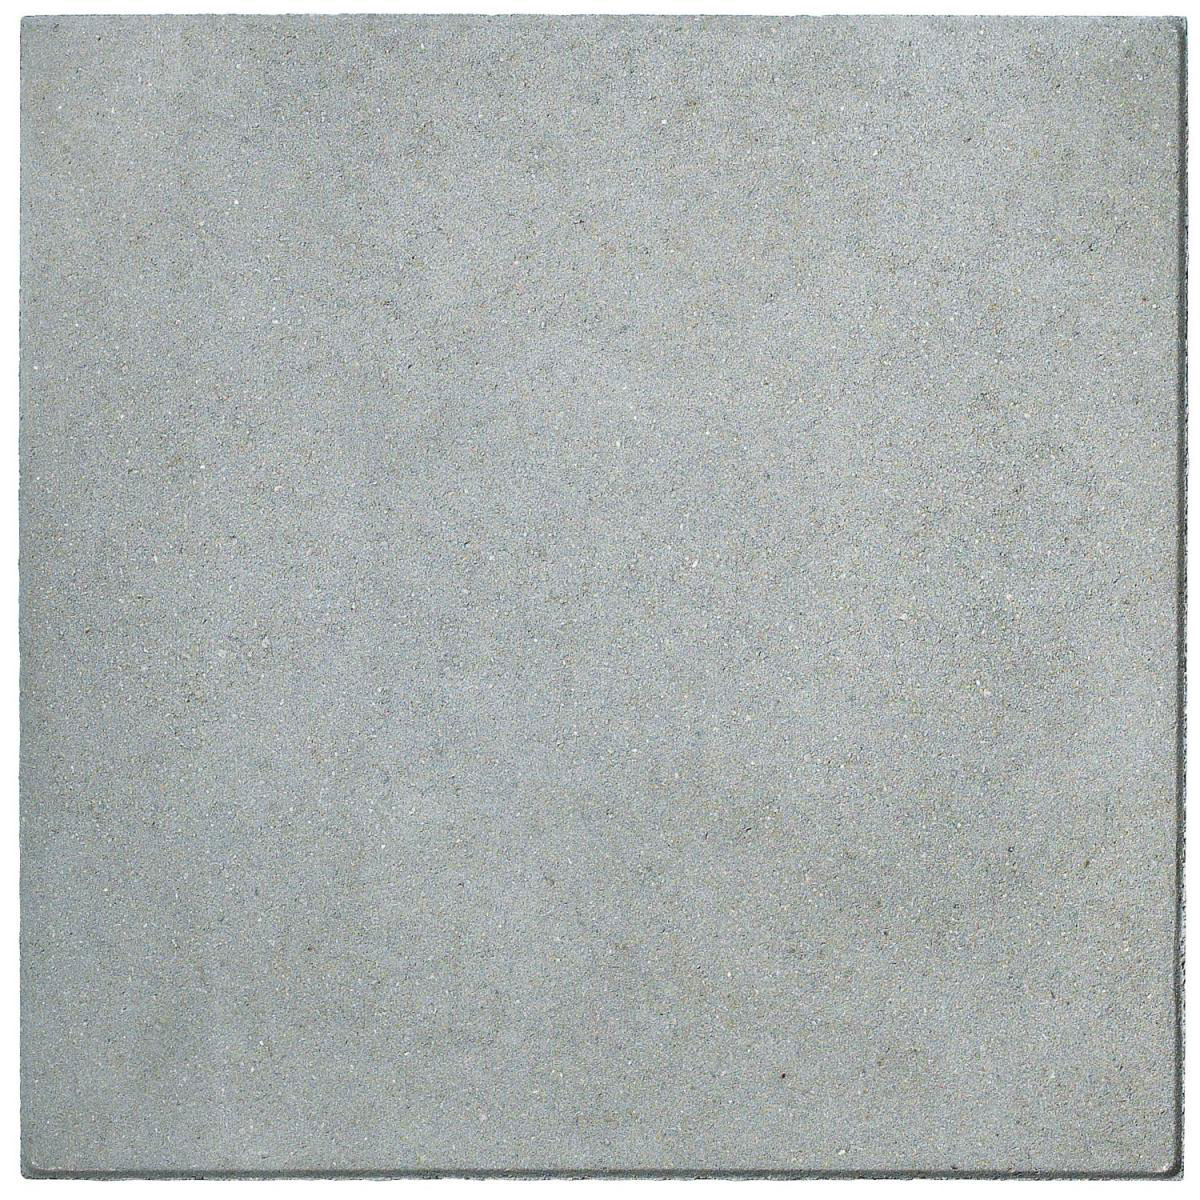 Beton Gehwegplatte, 30x30x4 cm, grau